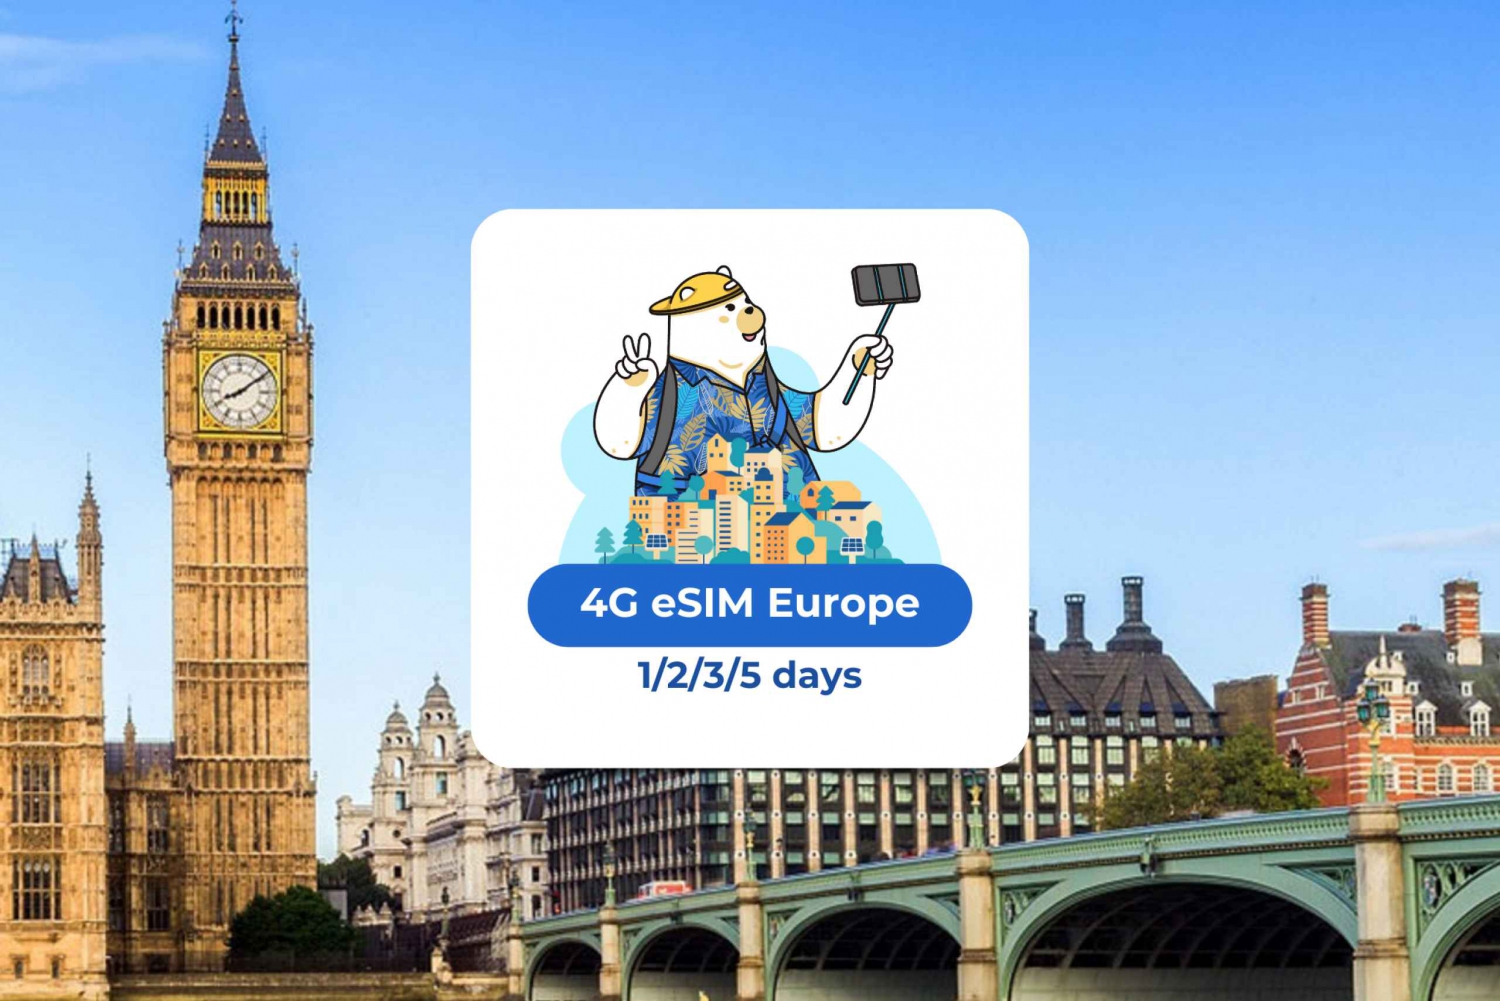 Europa: eSIM mobildata (33 lande) - 1/2/3/5/7 dage